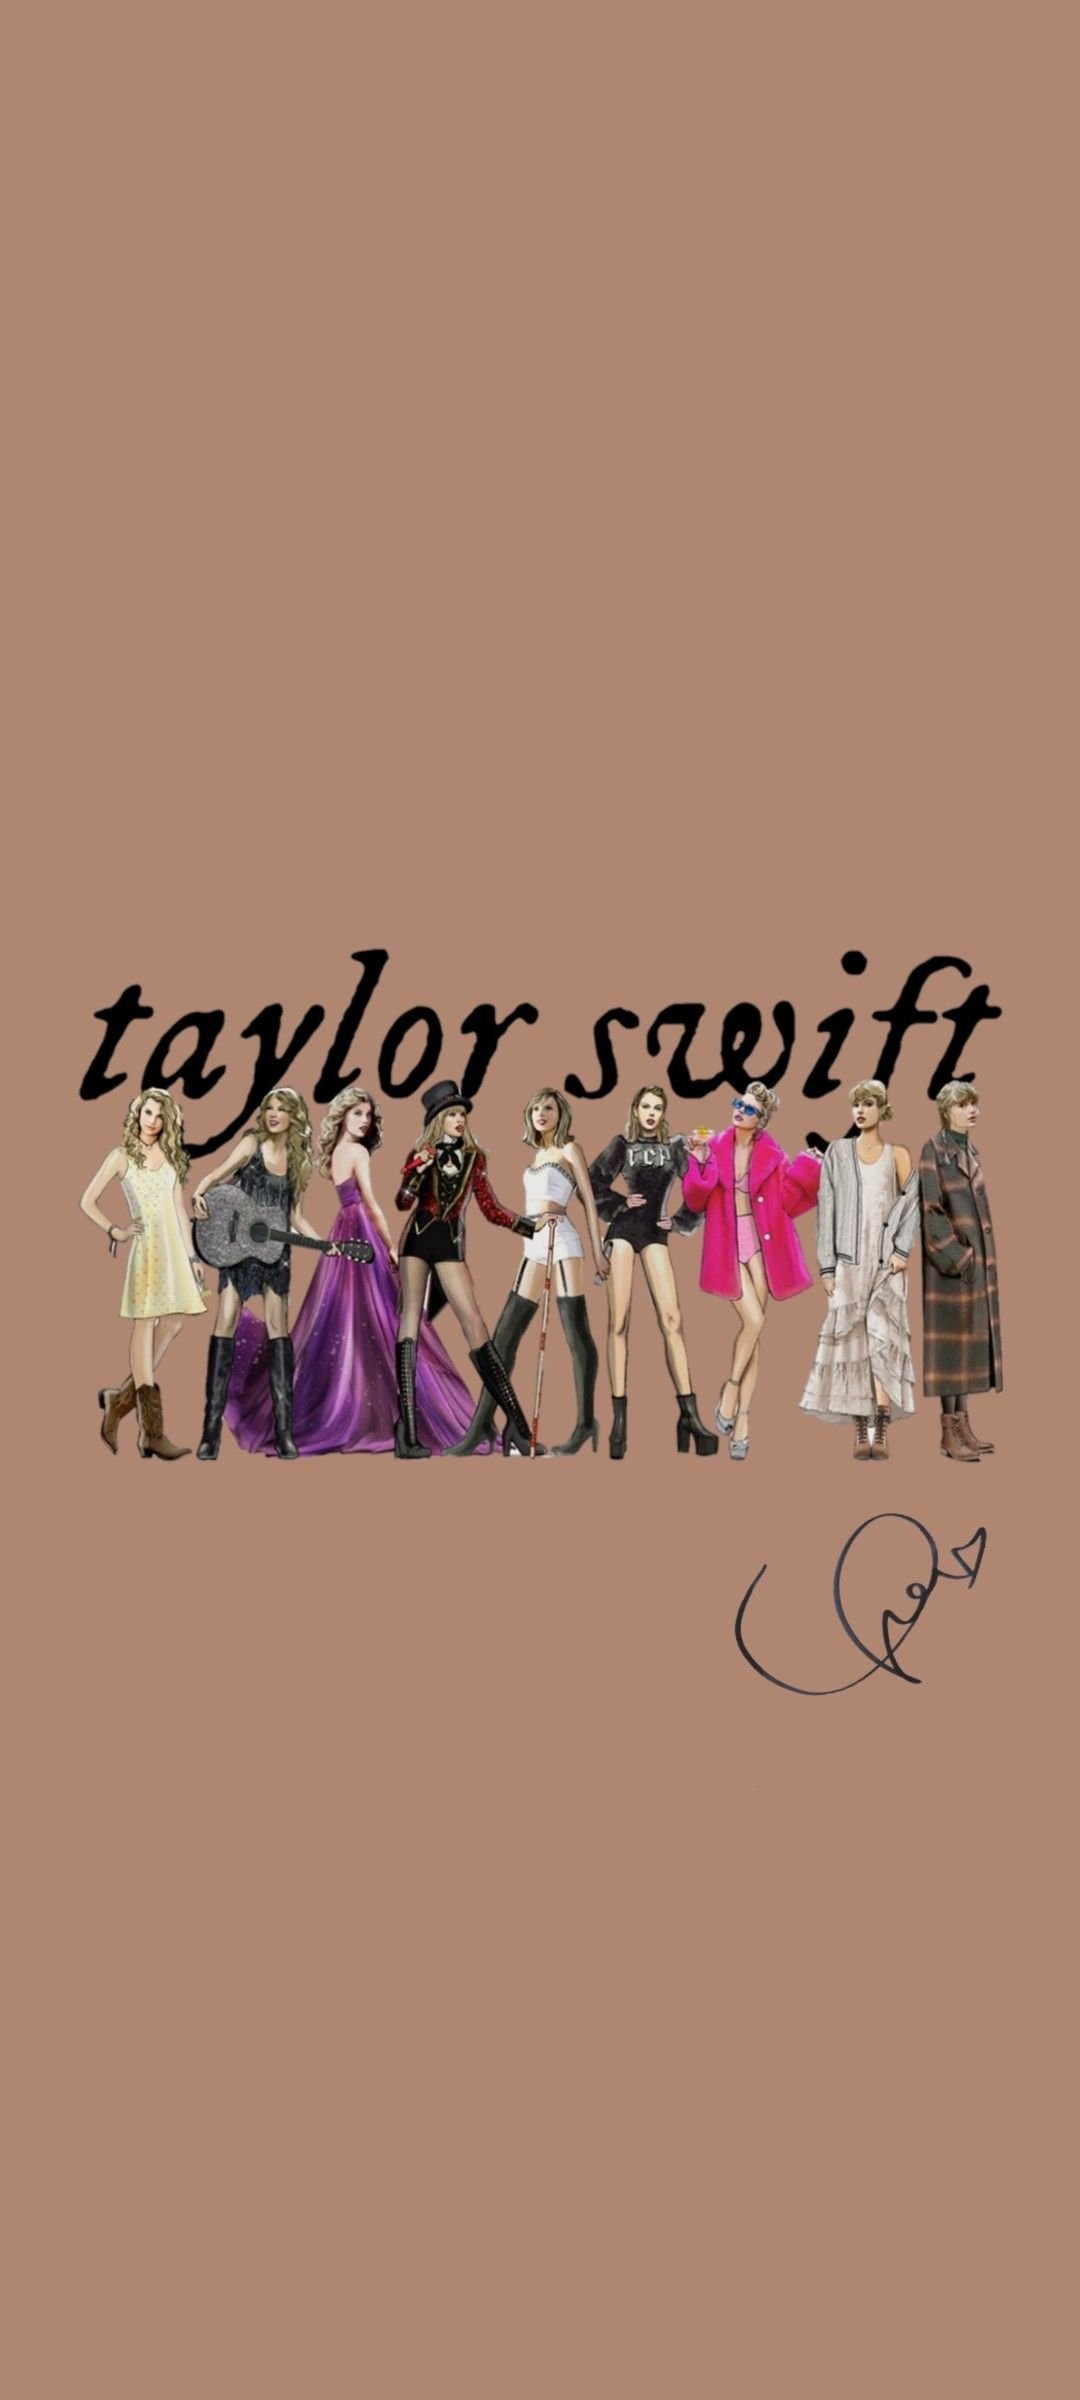 Taylor Swift eras lockscreen. Taylor swift songs, Taylor swift party, Taylor swift picture